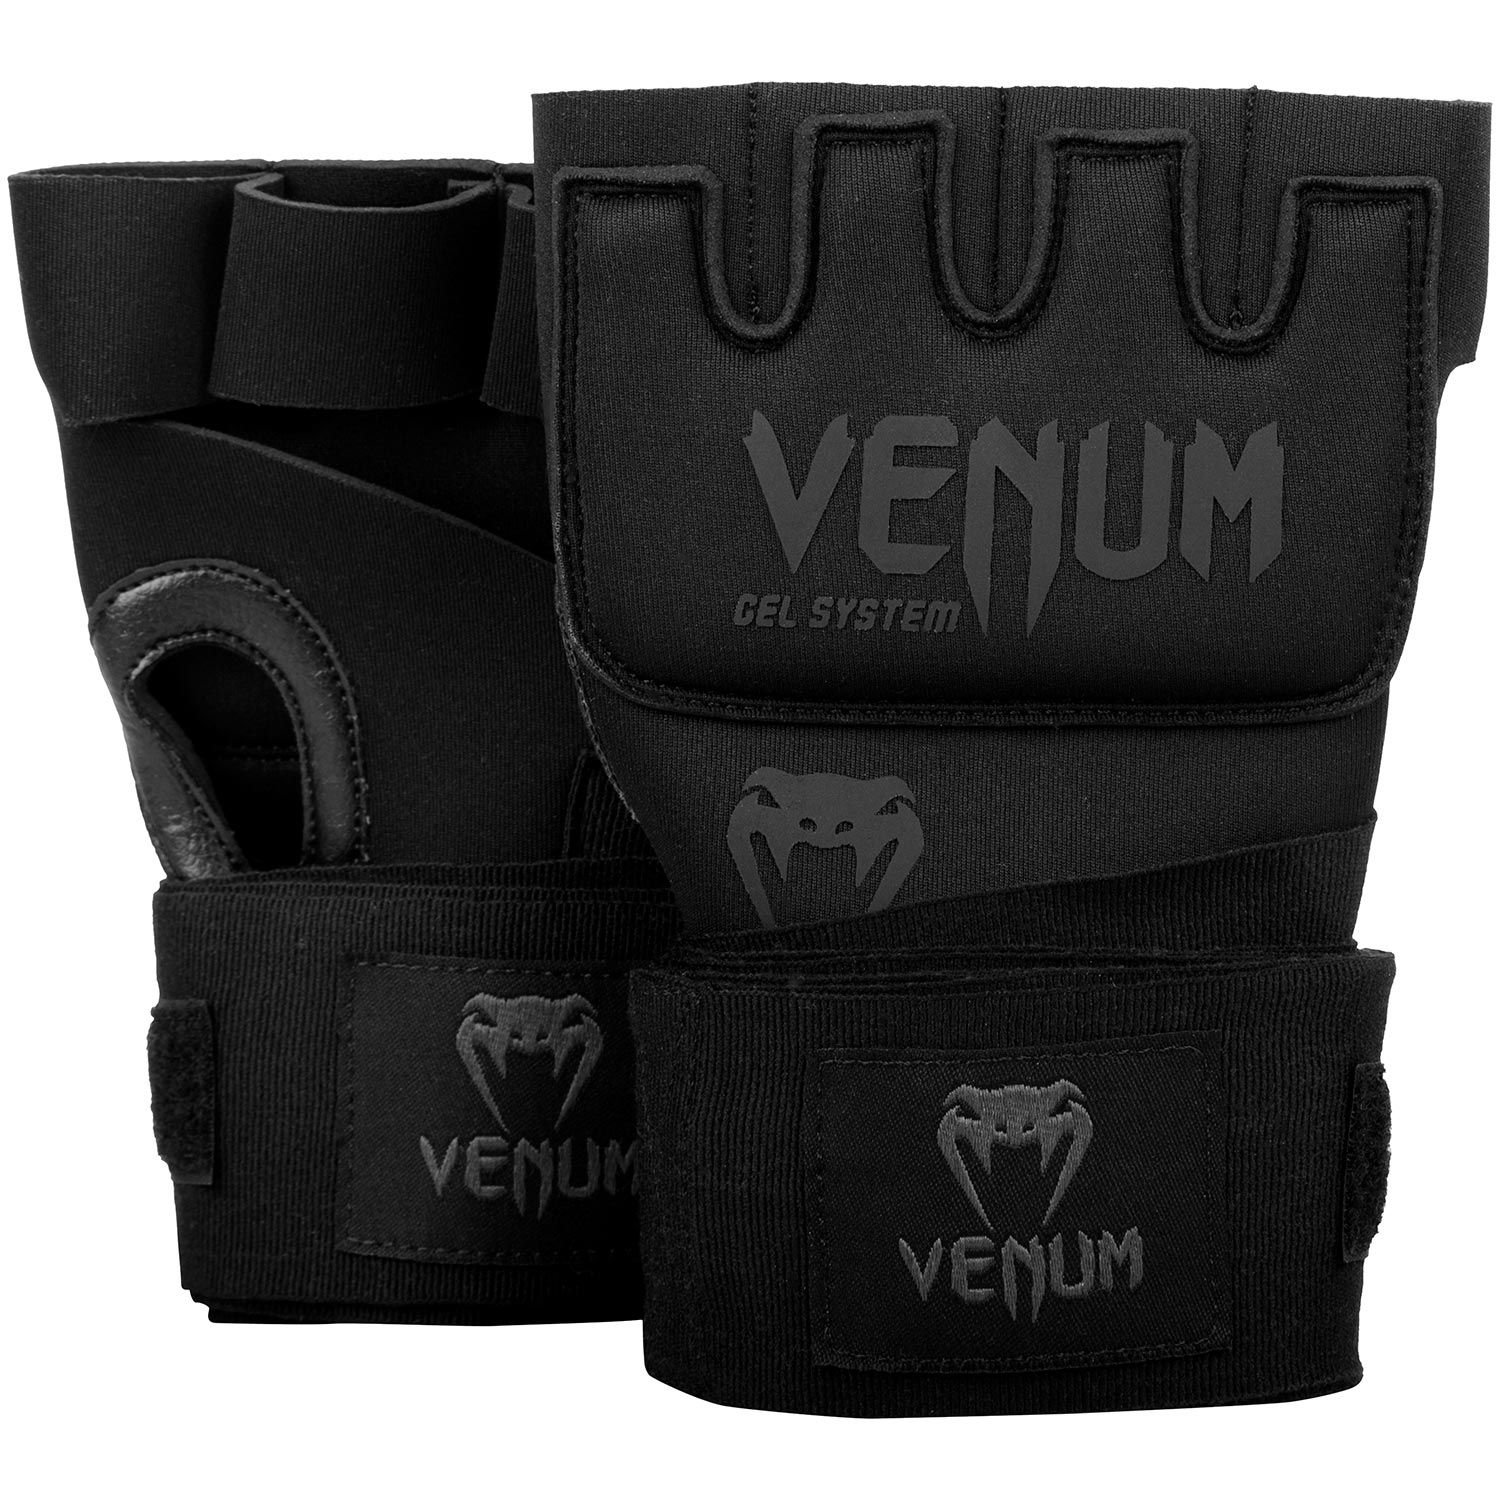 Venum Kontact Gel Glove Wraps - Black/Black